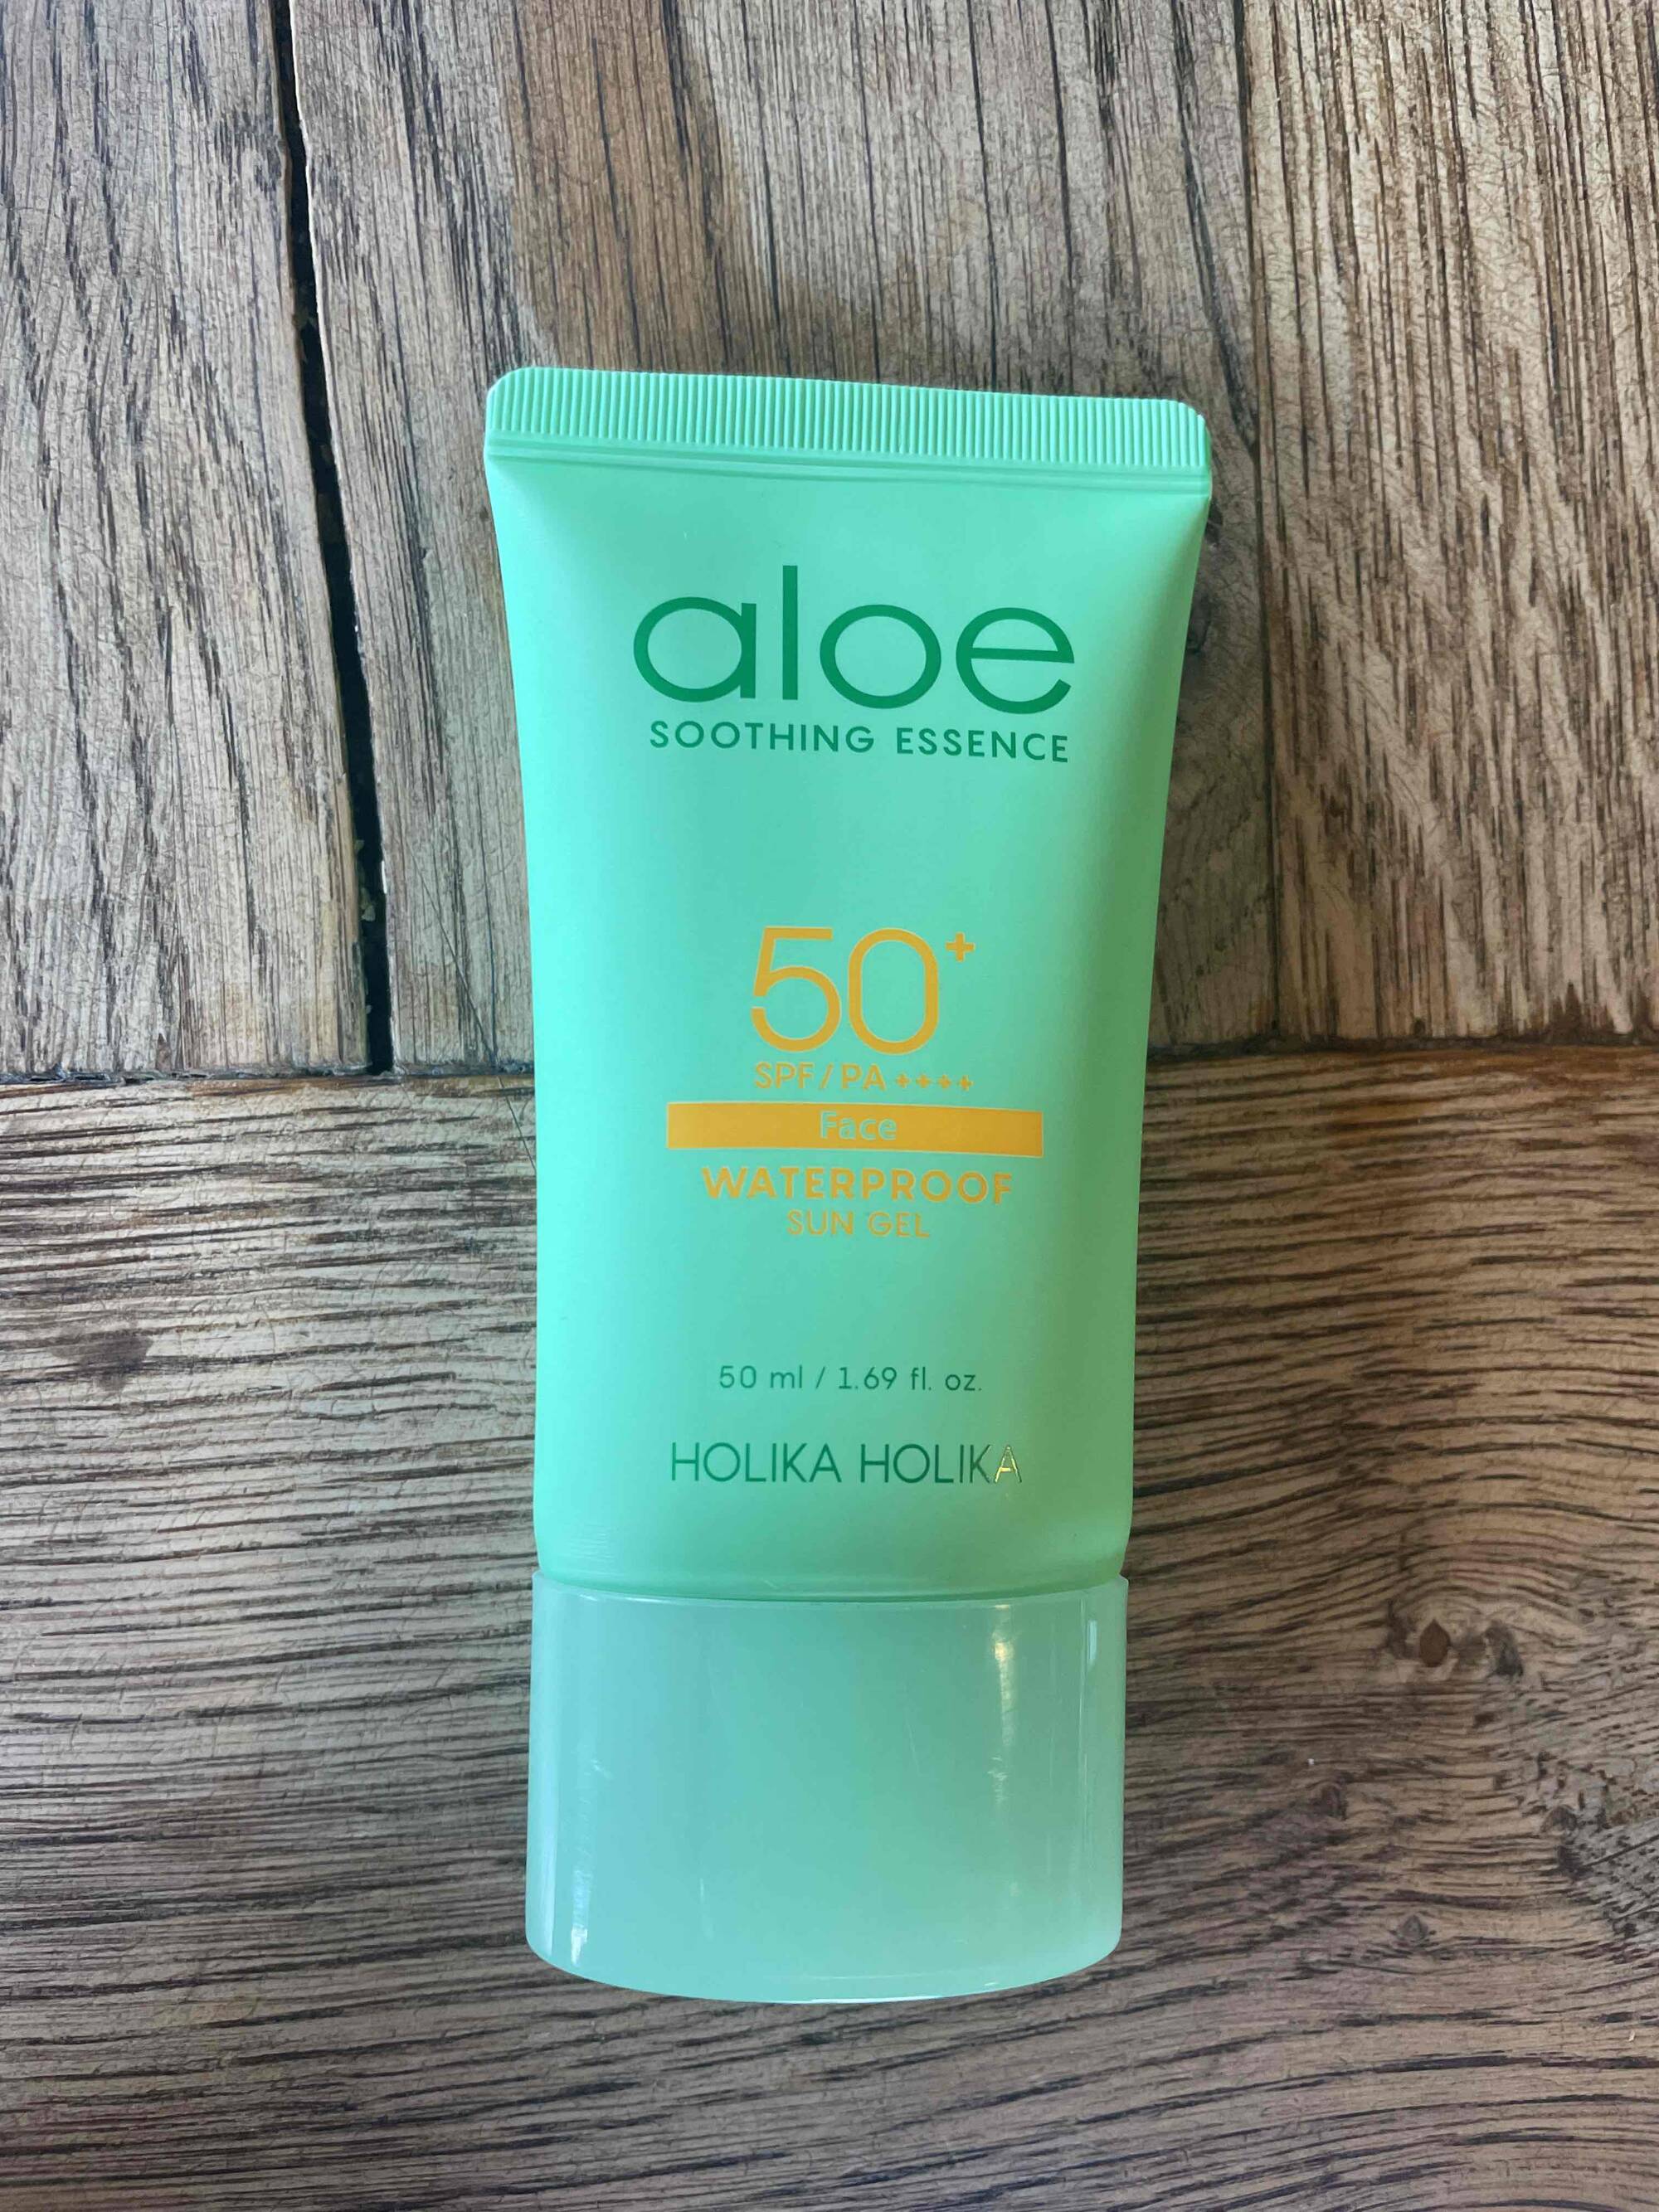 HOLIKA HOLIKA - Aloe soothing essence - Sun gel waterproof spf50+